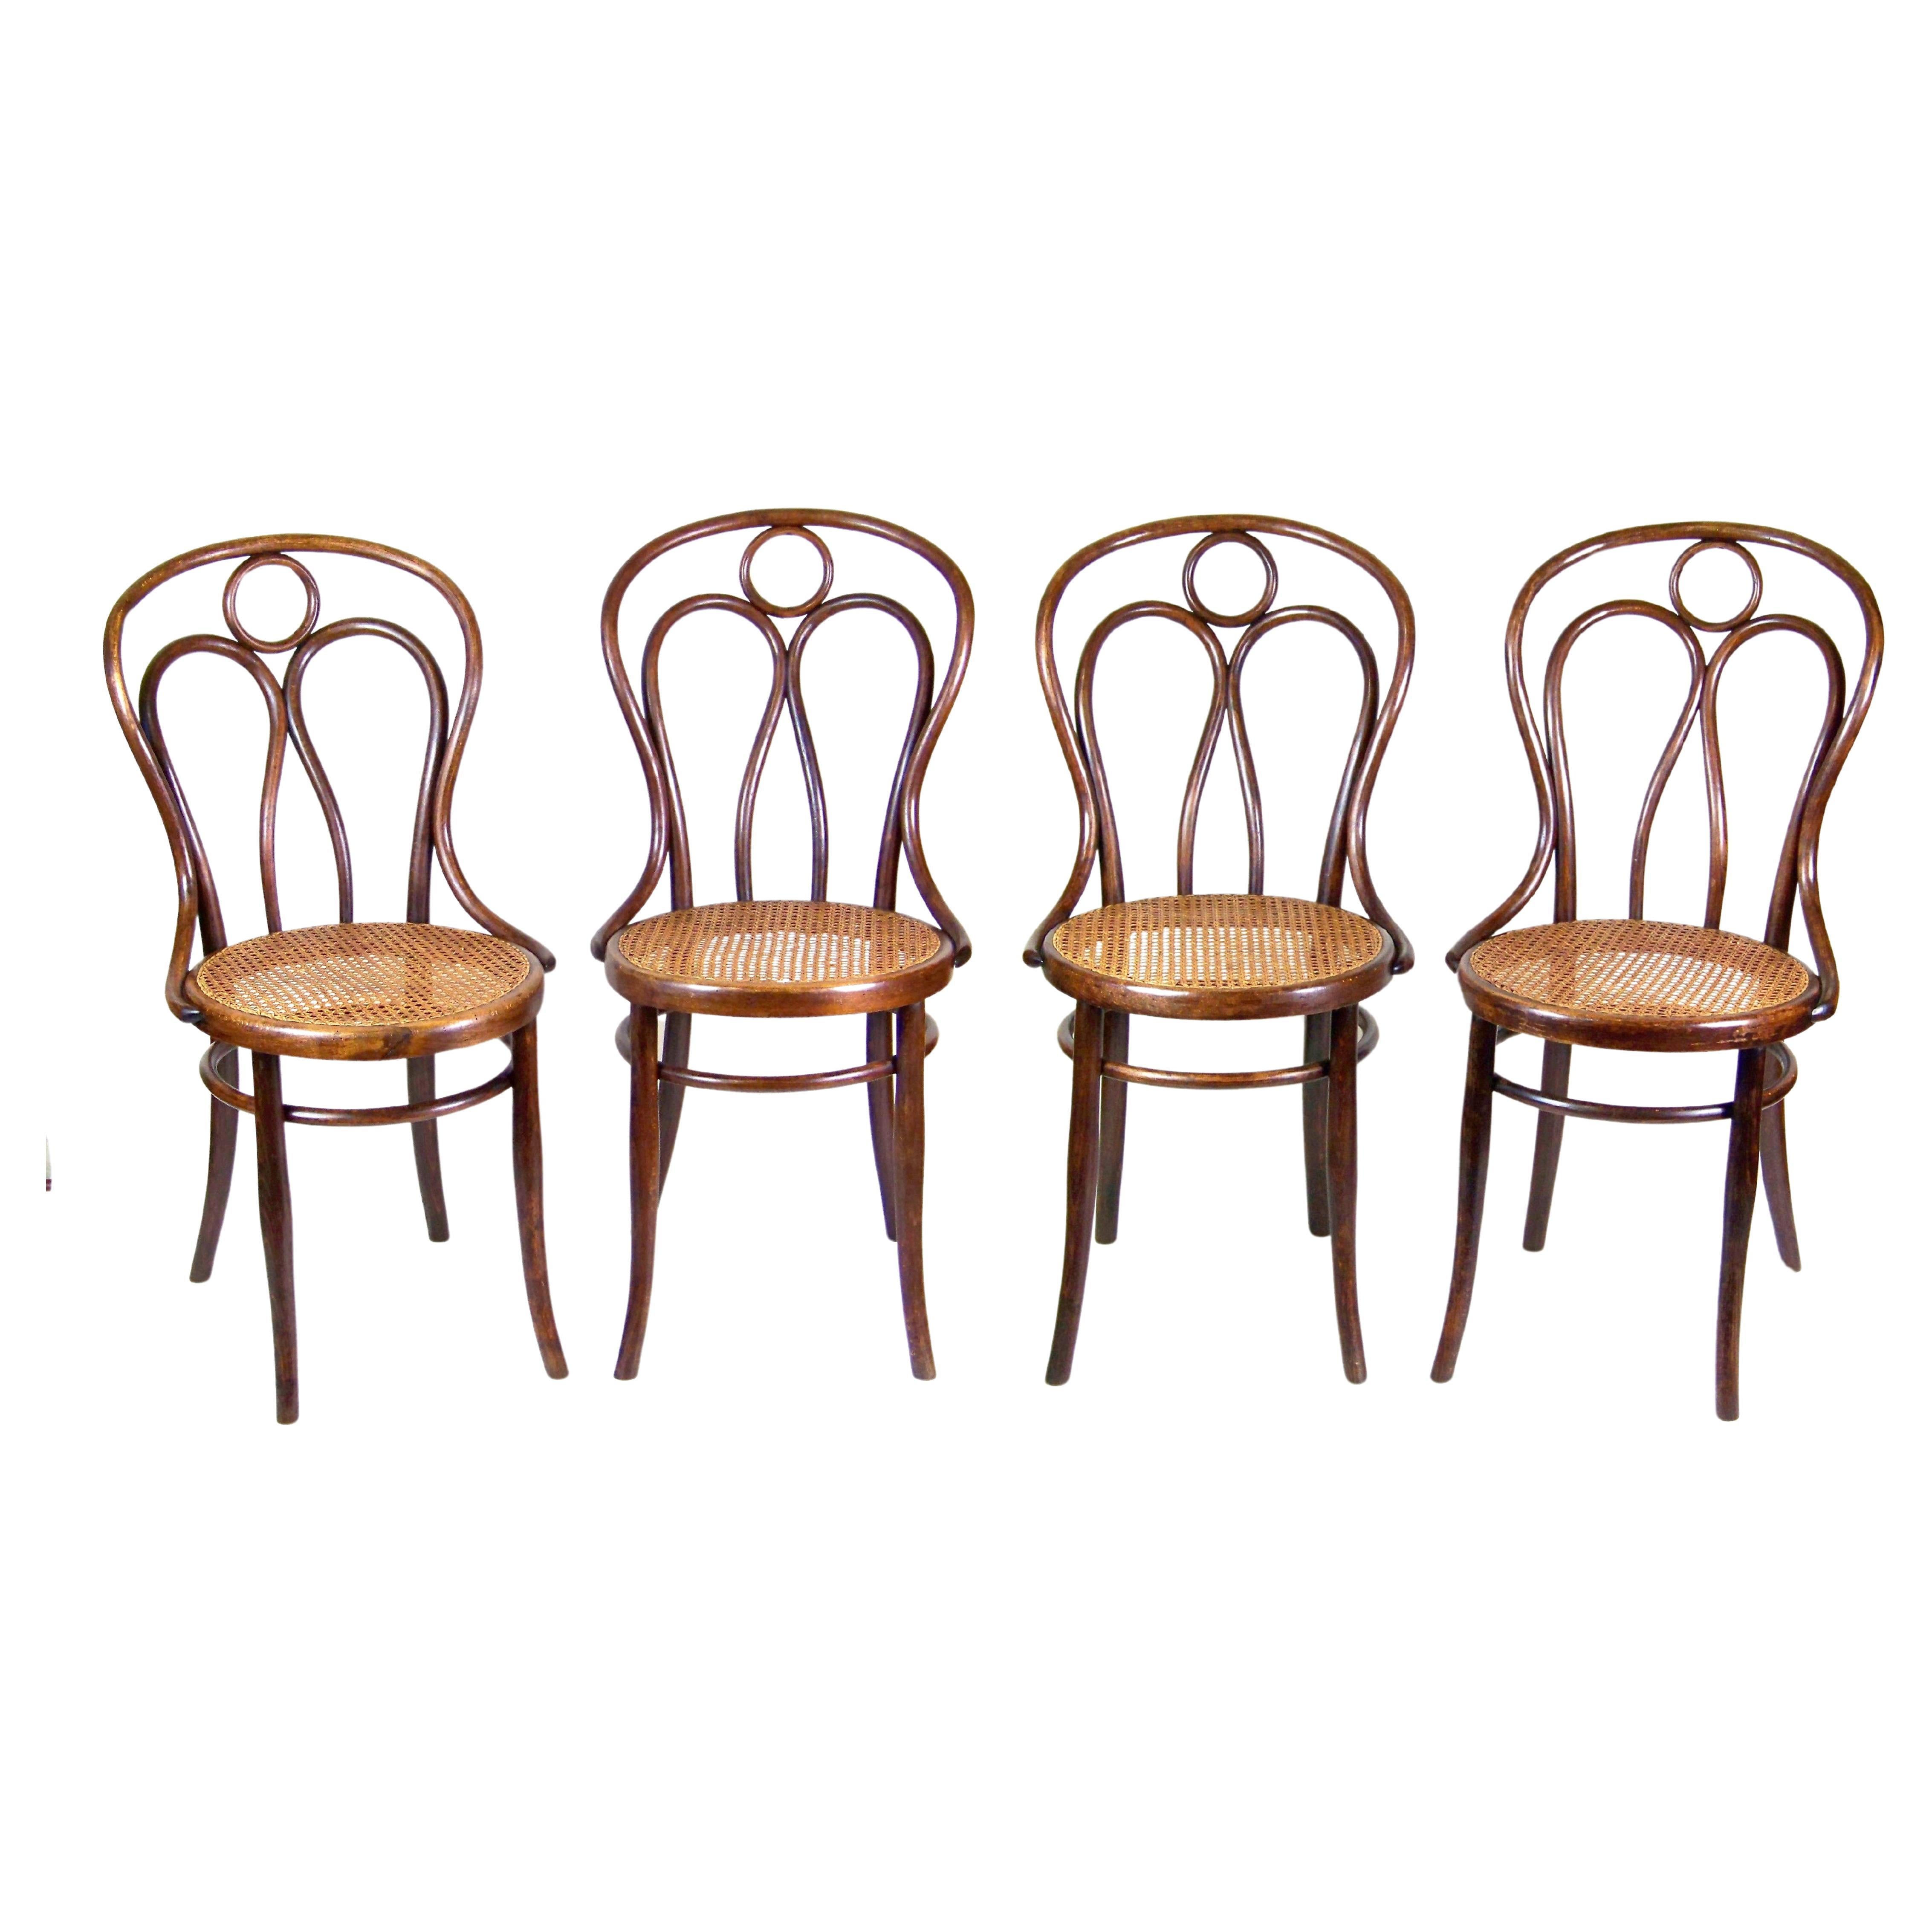 Quatre chaises Thonet Nr.19, vers 1900